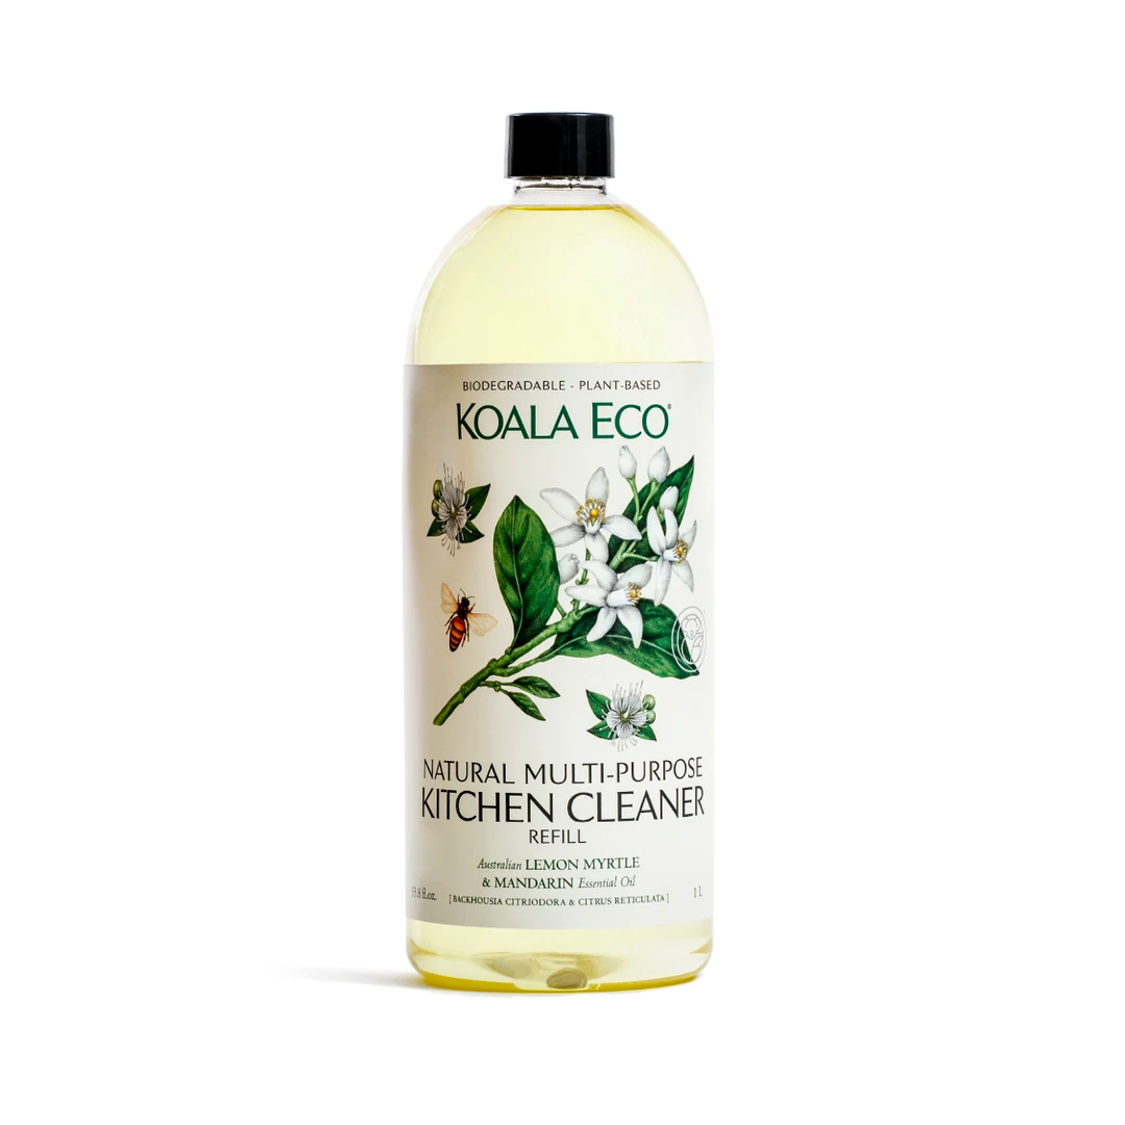 Koala Eco Natural Multi-Purpose Kitchen Cleaner (Refill)